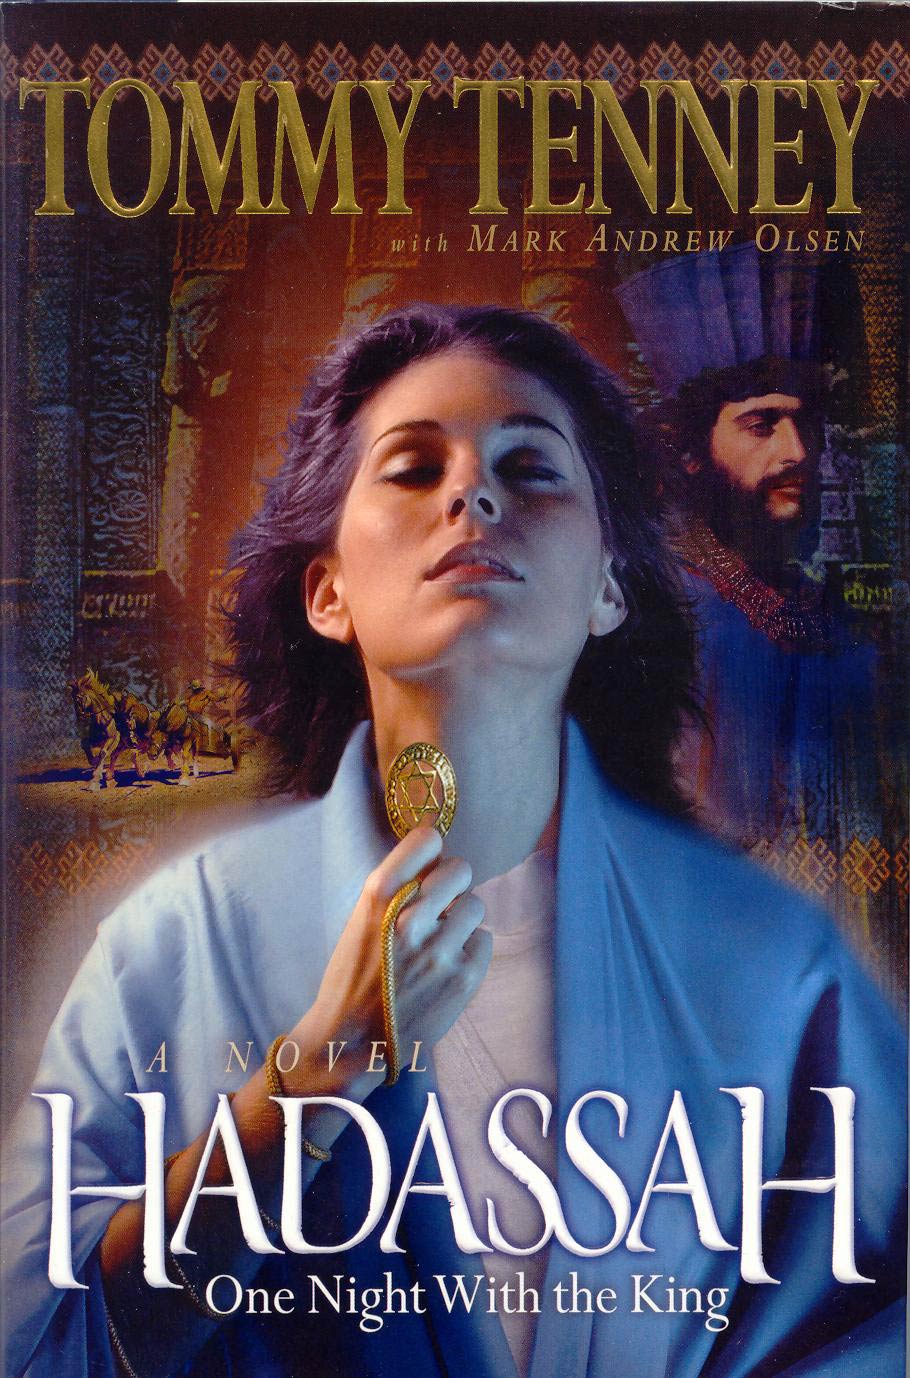 Hadassah, a novel by Tommy Tenney